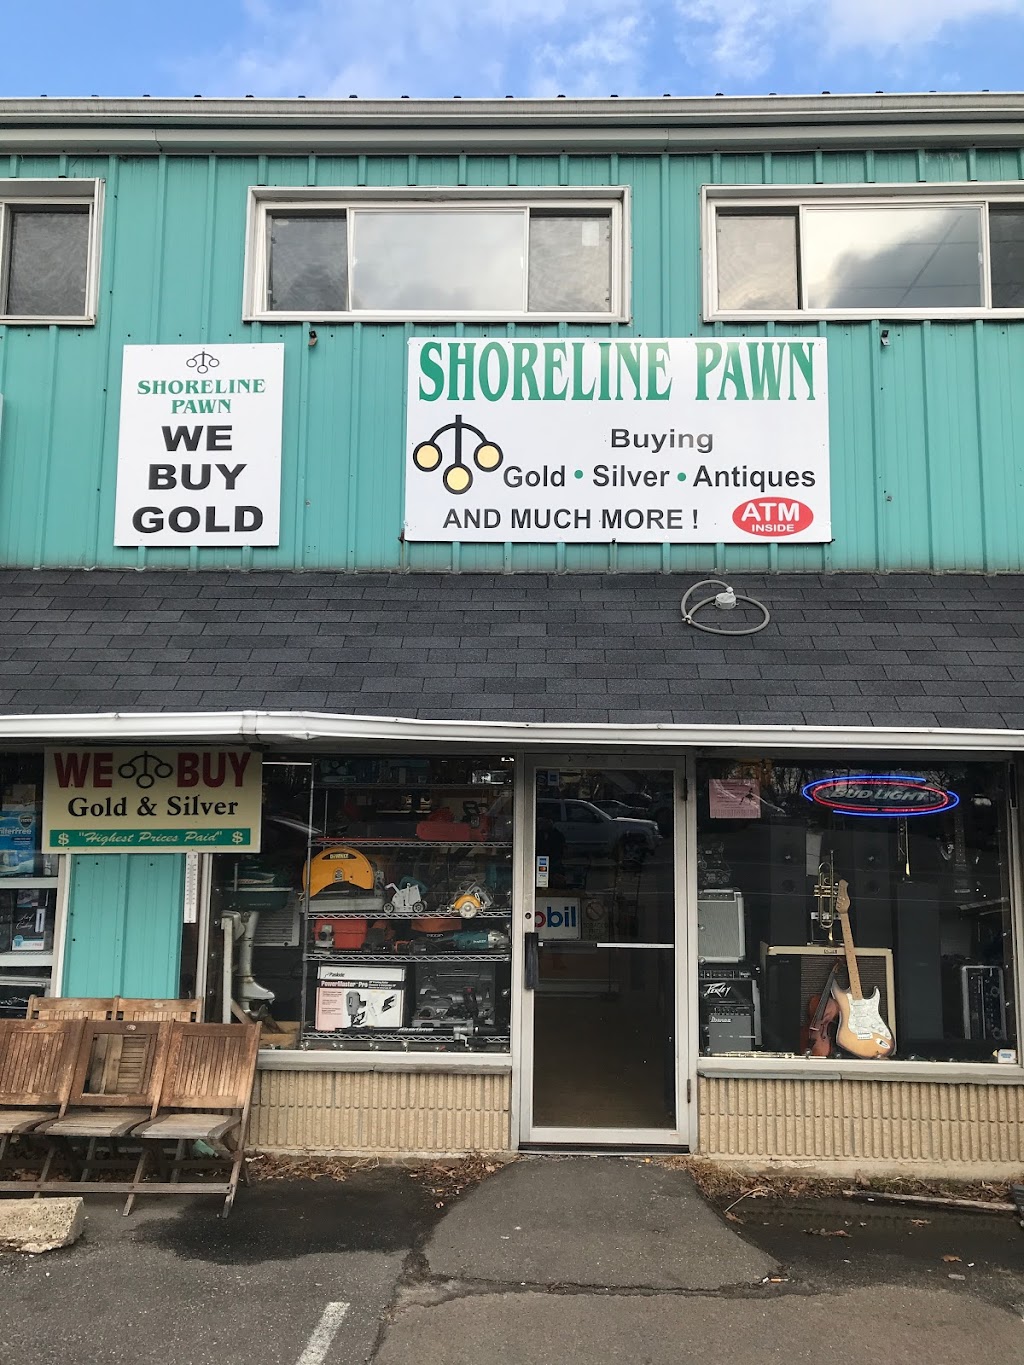 Shoreline Pawn | 224 E Main St, Clinton, CT 06413 | Phone: (860) 552-6228